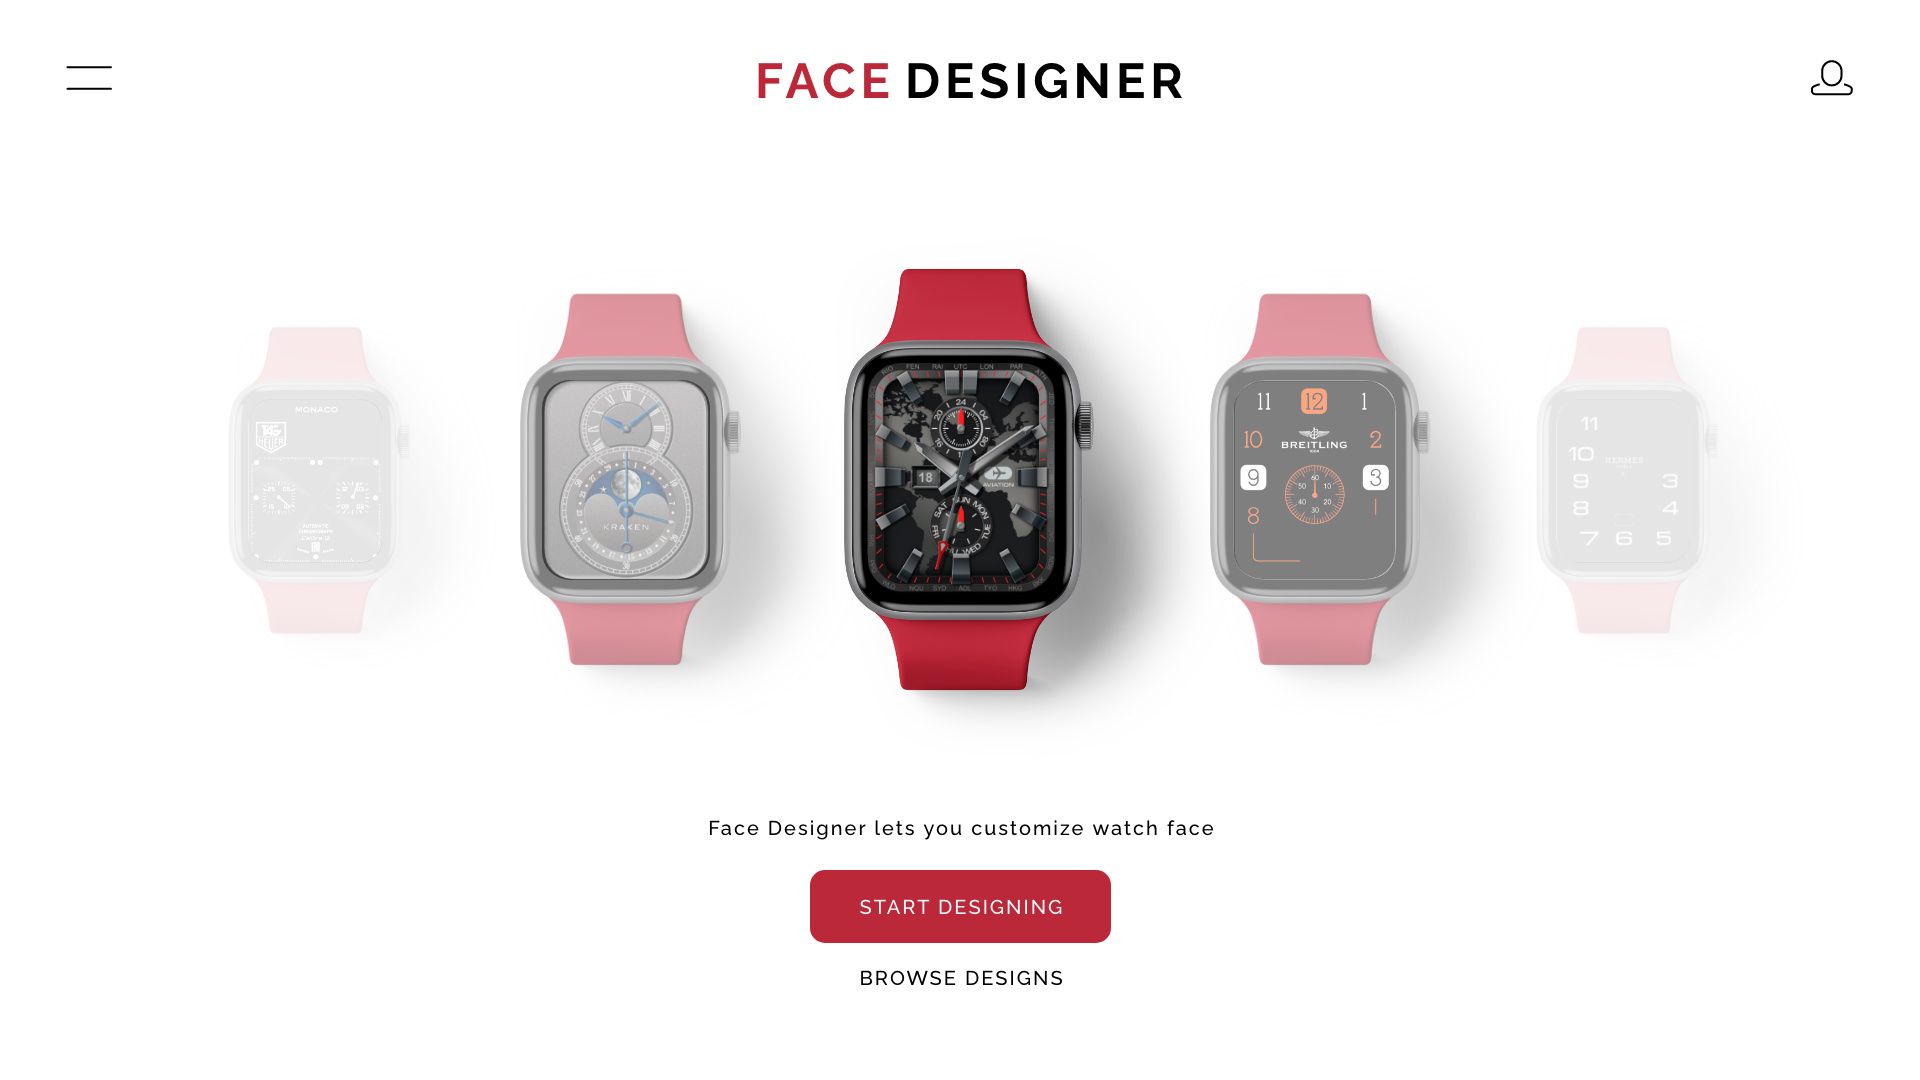 Apple Face Designer